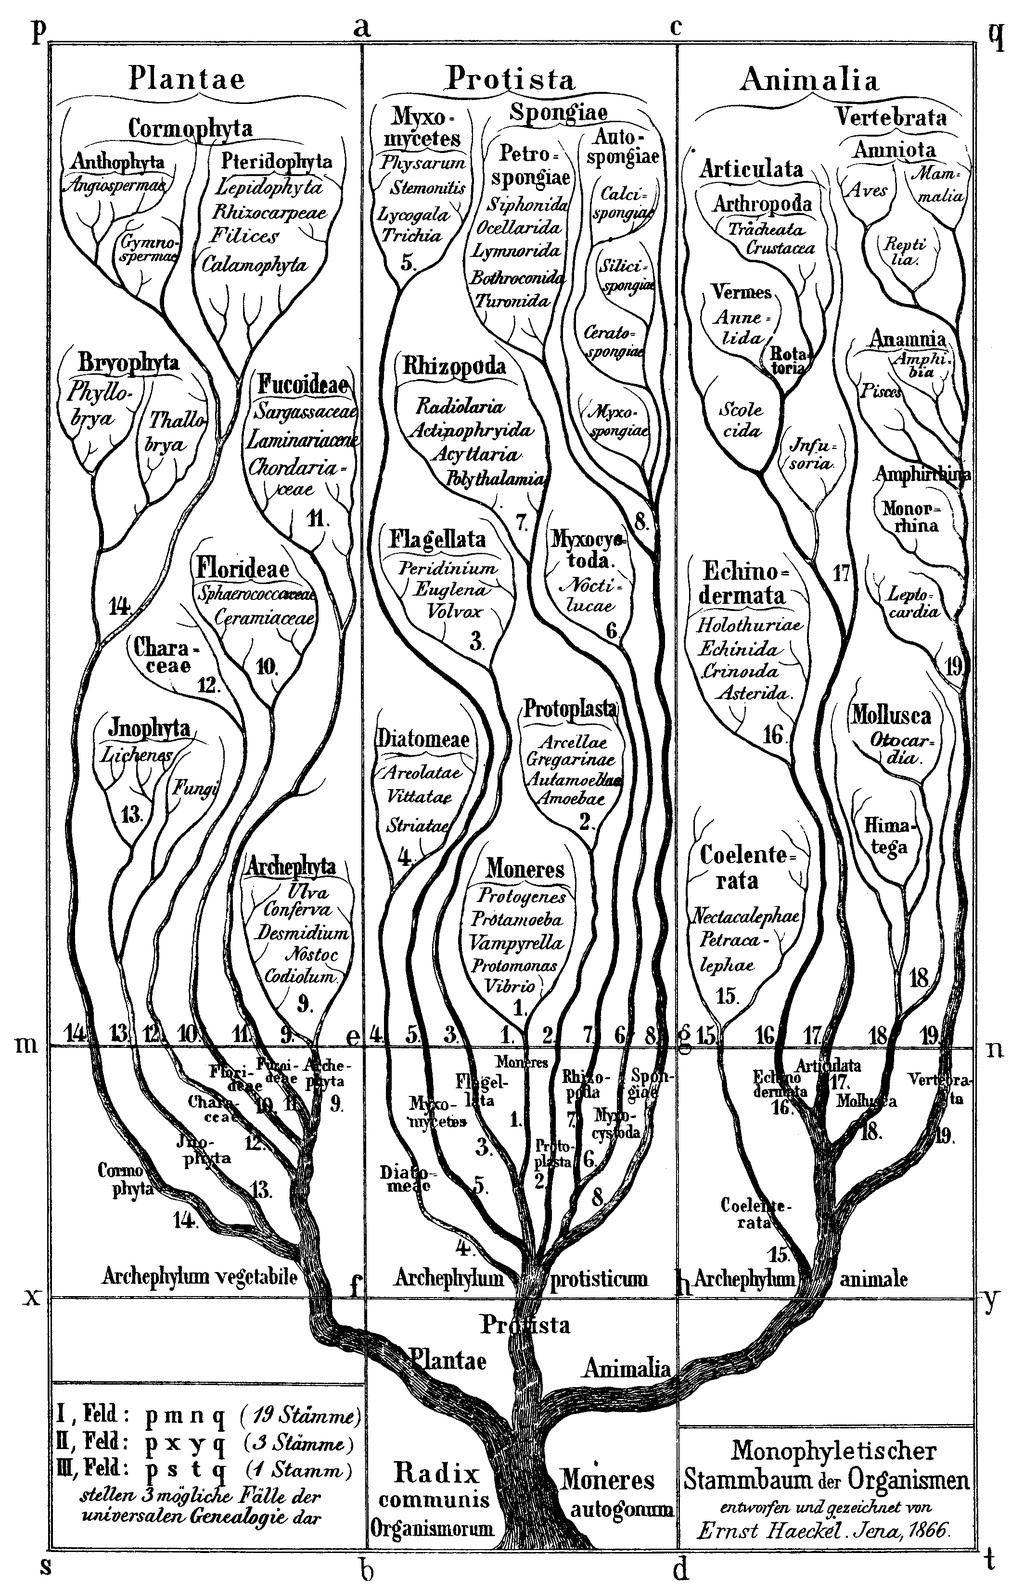 Darwin imagined life story as a tree.